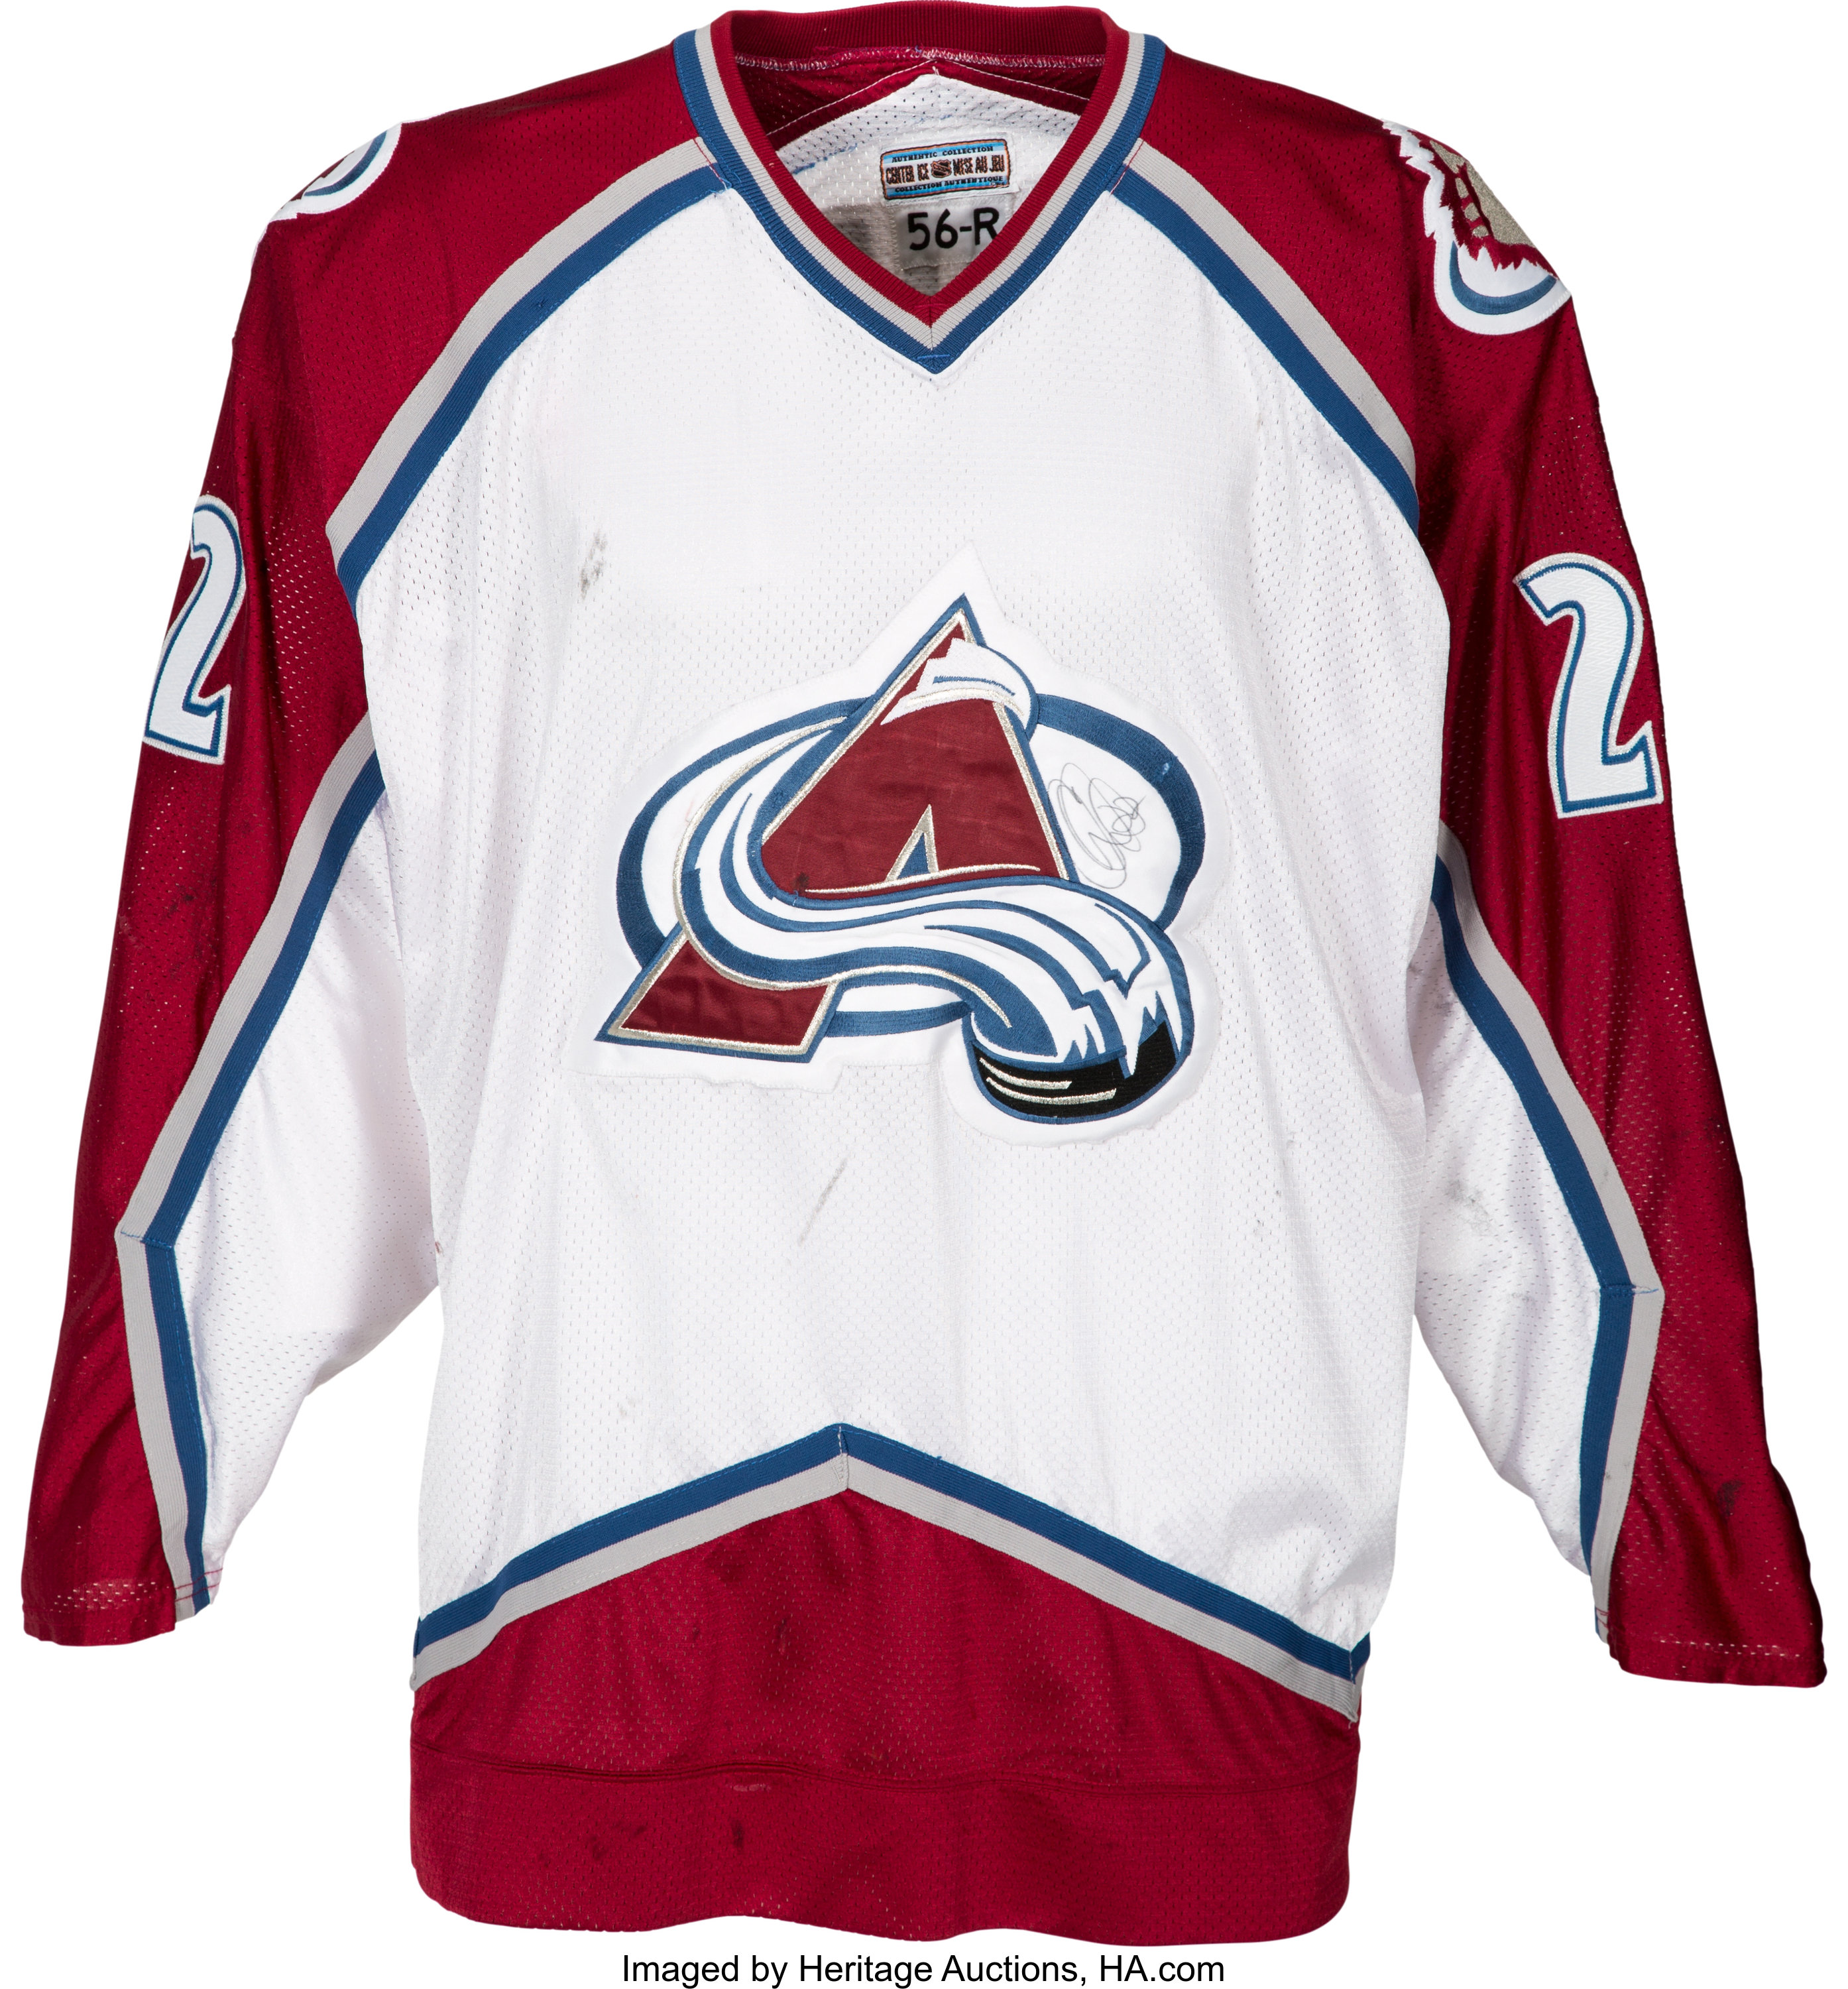 89 Claude Lemieux - Colorado Avalanche - 1996-97 Topps NHL Picks Hockey